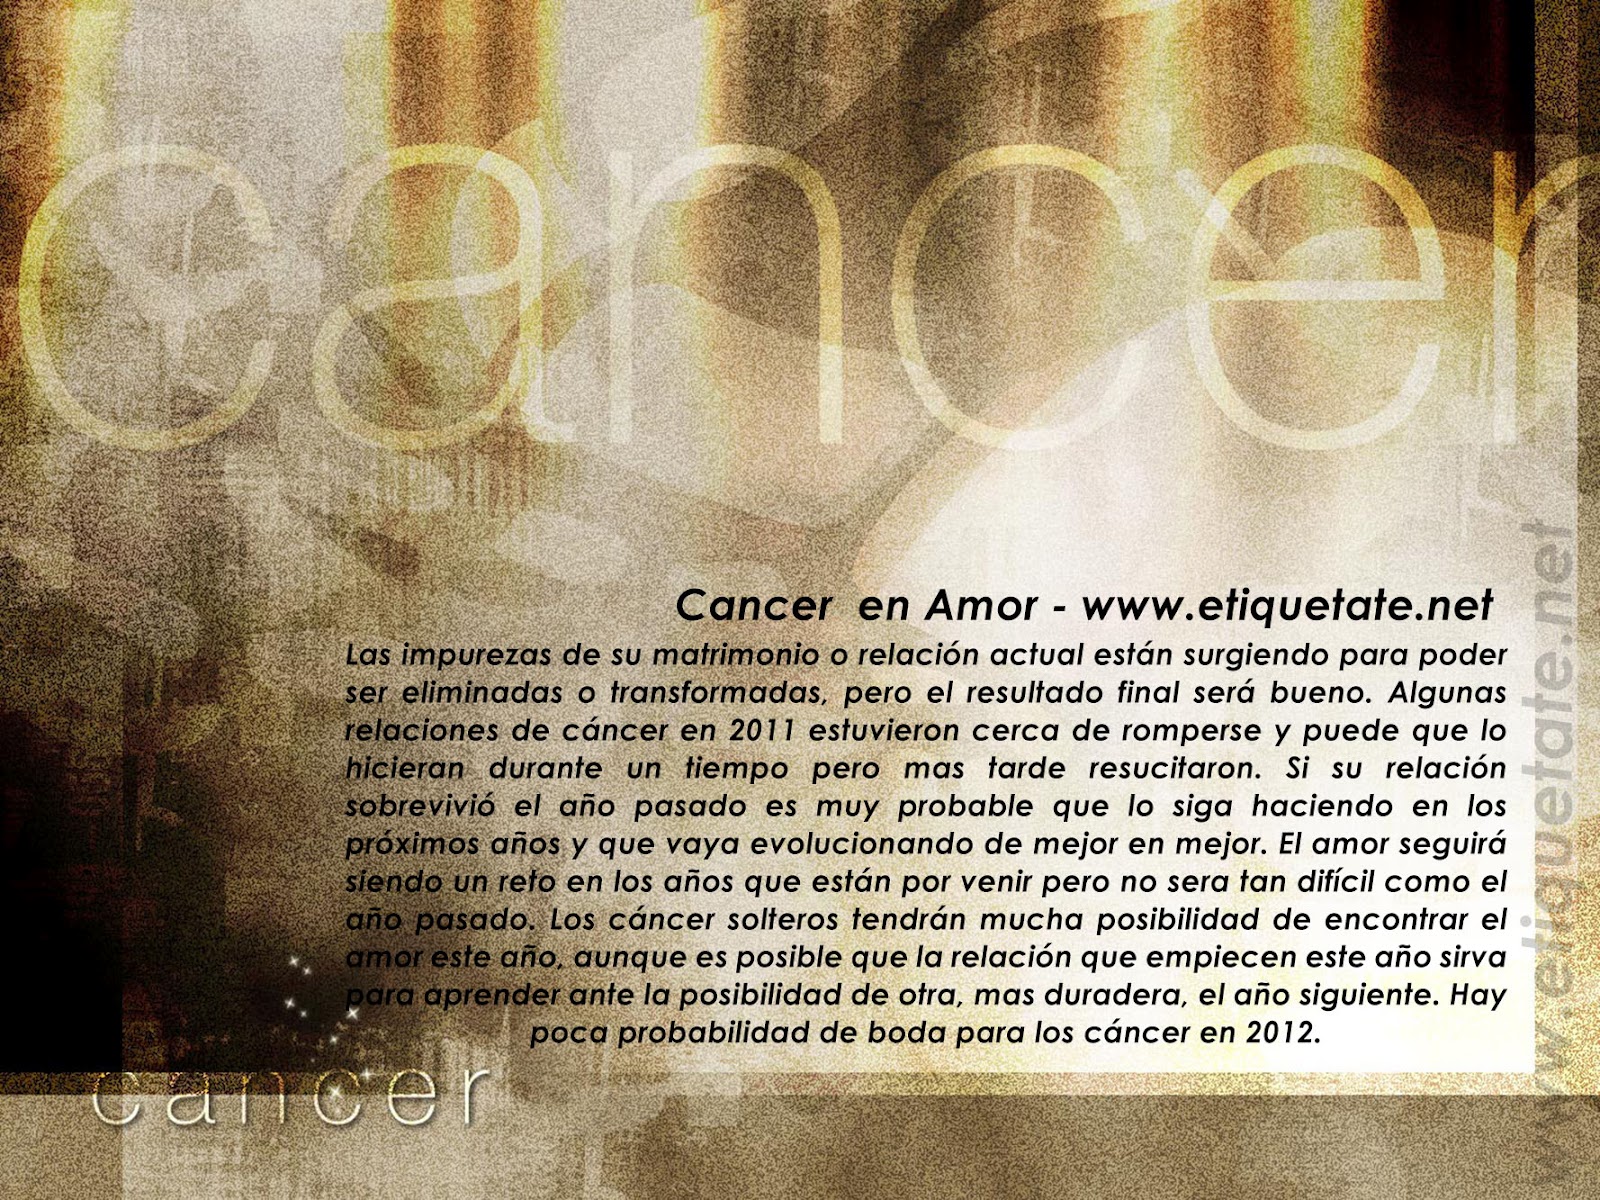 http://2.bp.blogspot.com/-awVDB8kGY9g/UD_wbQNY8qI/AAAAAAAAHbQ/61OxdG0w_ko/s1600/C%C3%A1ncer+en+El+Amor+-+Imagenes+de+los+Signos+del+Zodiaco+para+Facebook1.jpg